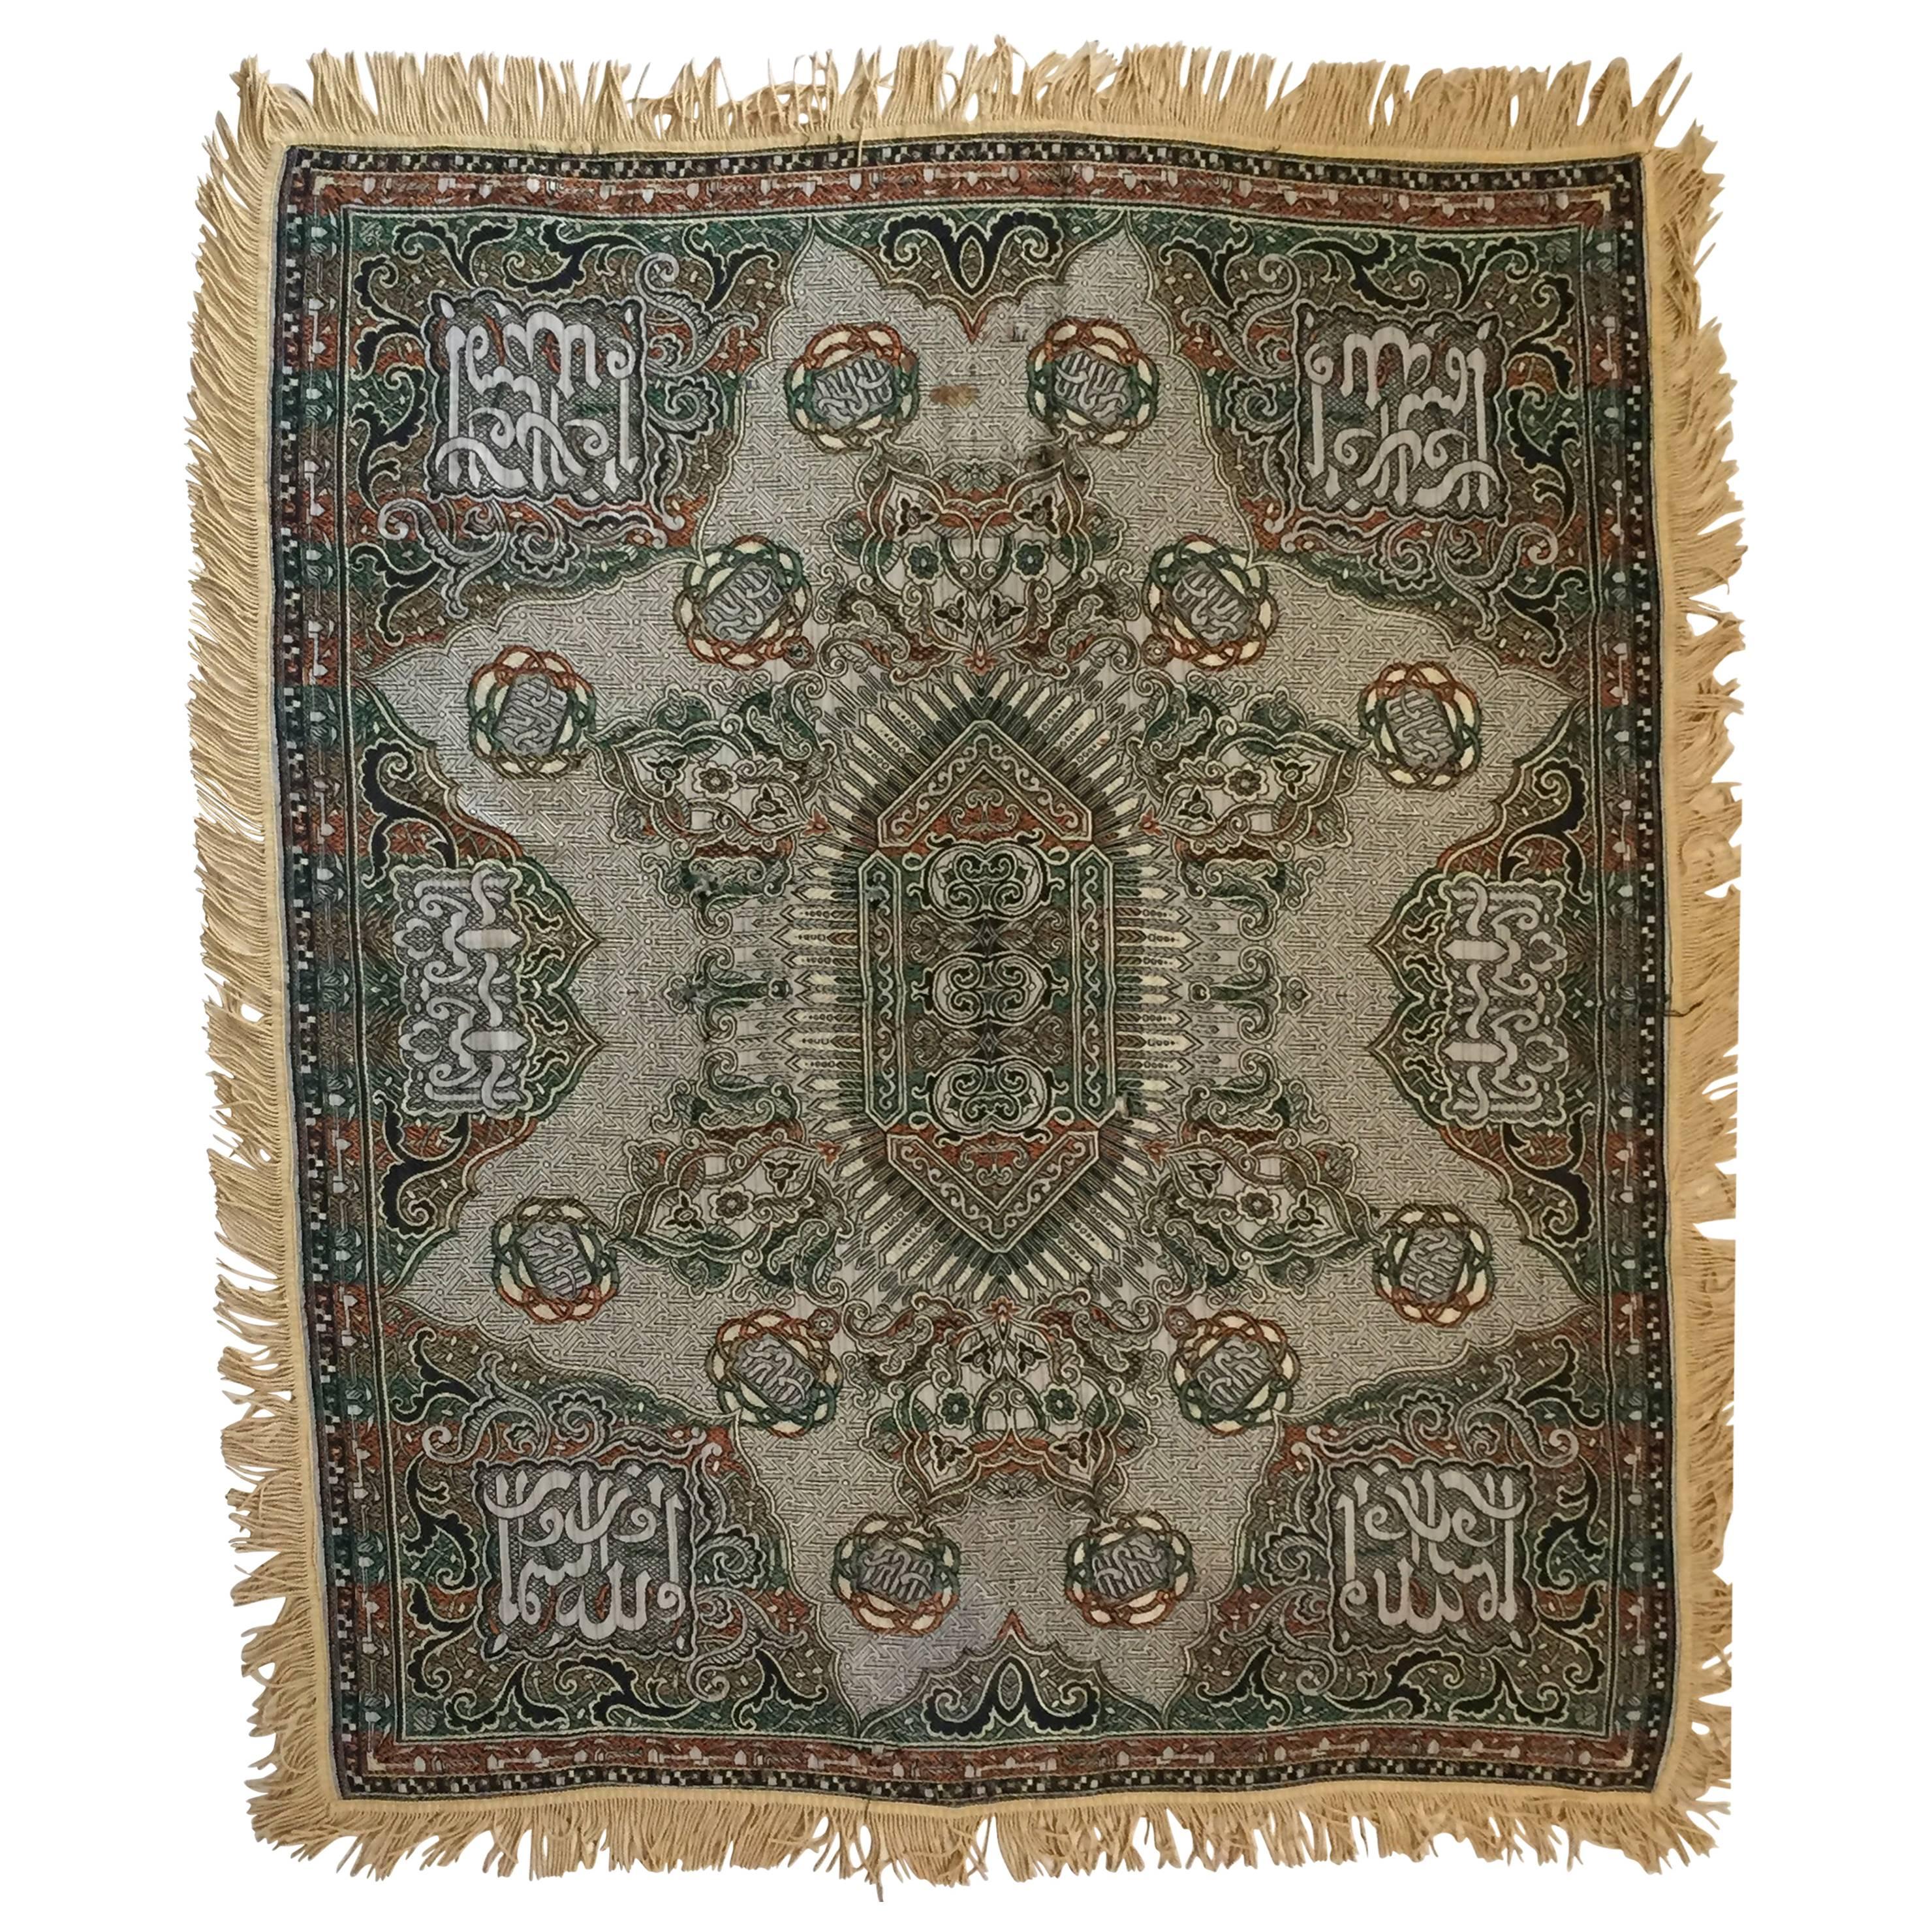 Granada Islamic Spain Textile with Moorish Calligraphy Writing